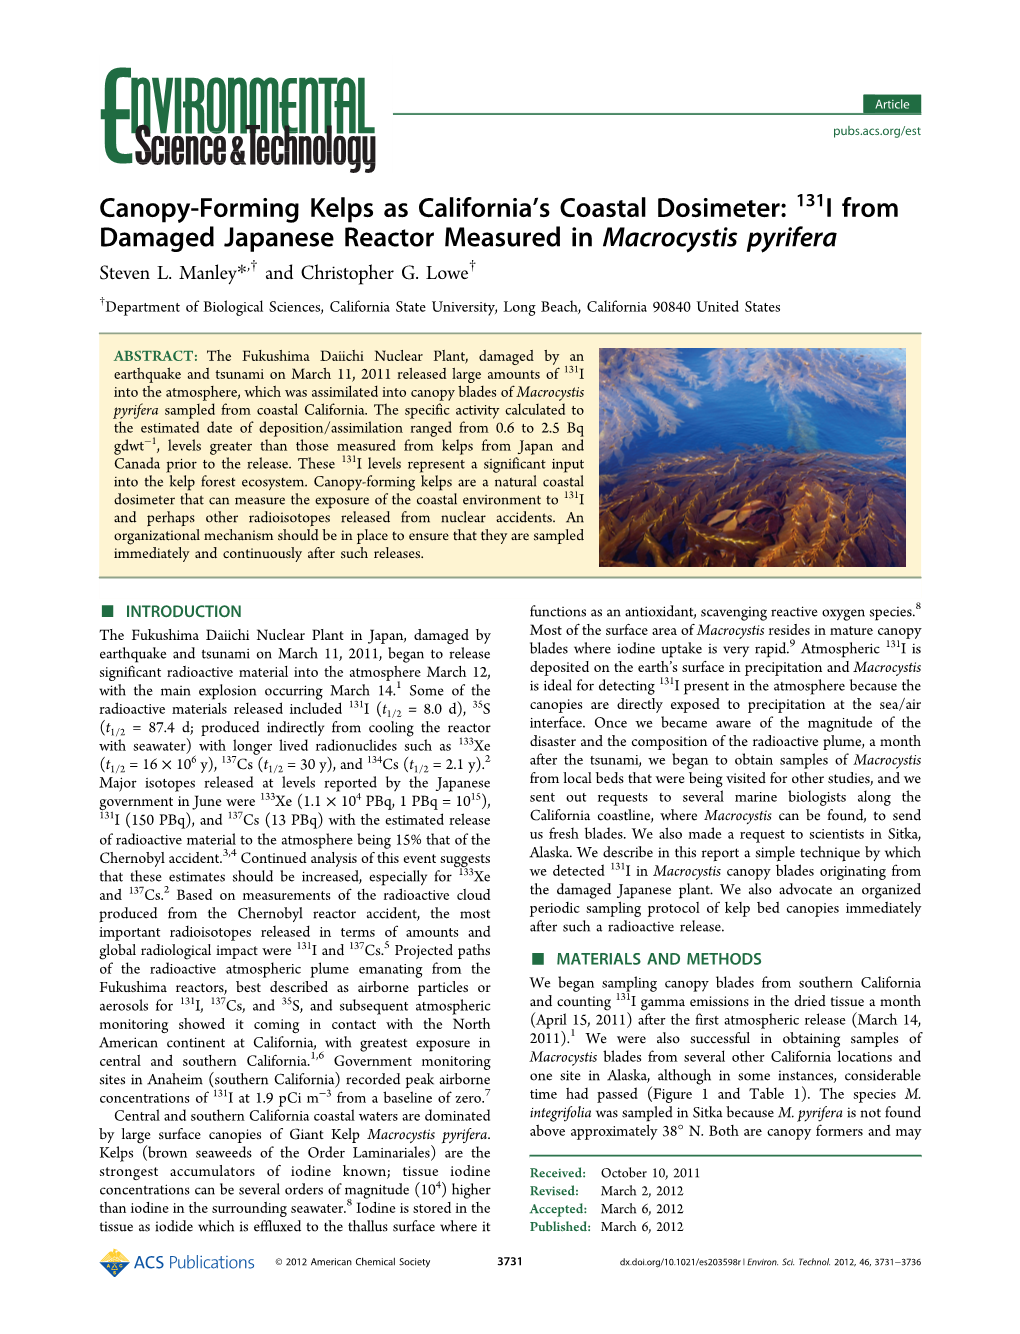 Canopy-Forming Kelps As California's Coastal Dosimeter: 131I from Damaged Japanese Reactor Measured in Macrocystis Pyrifera